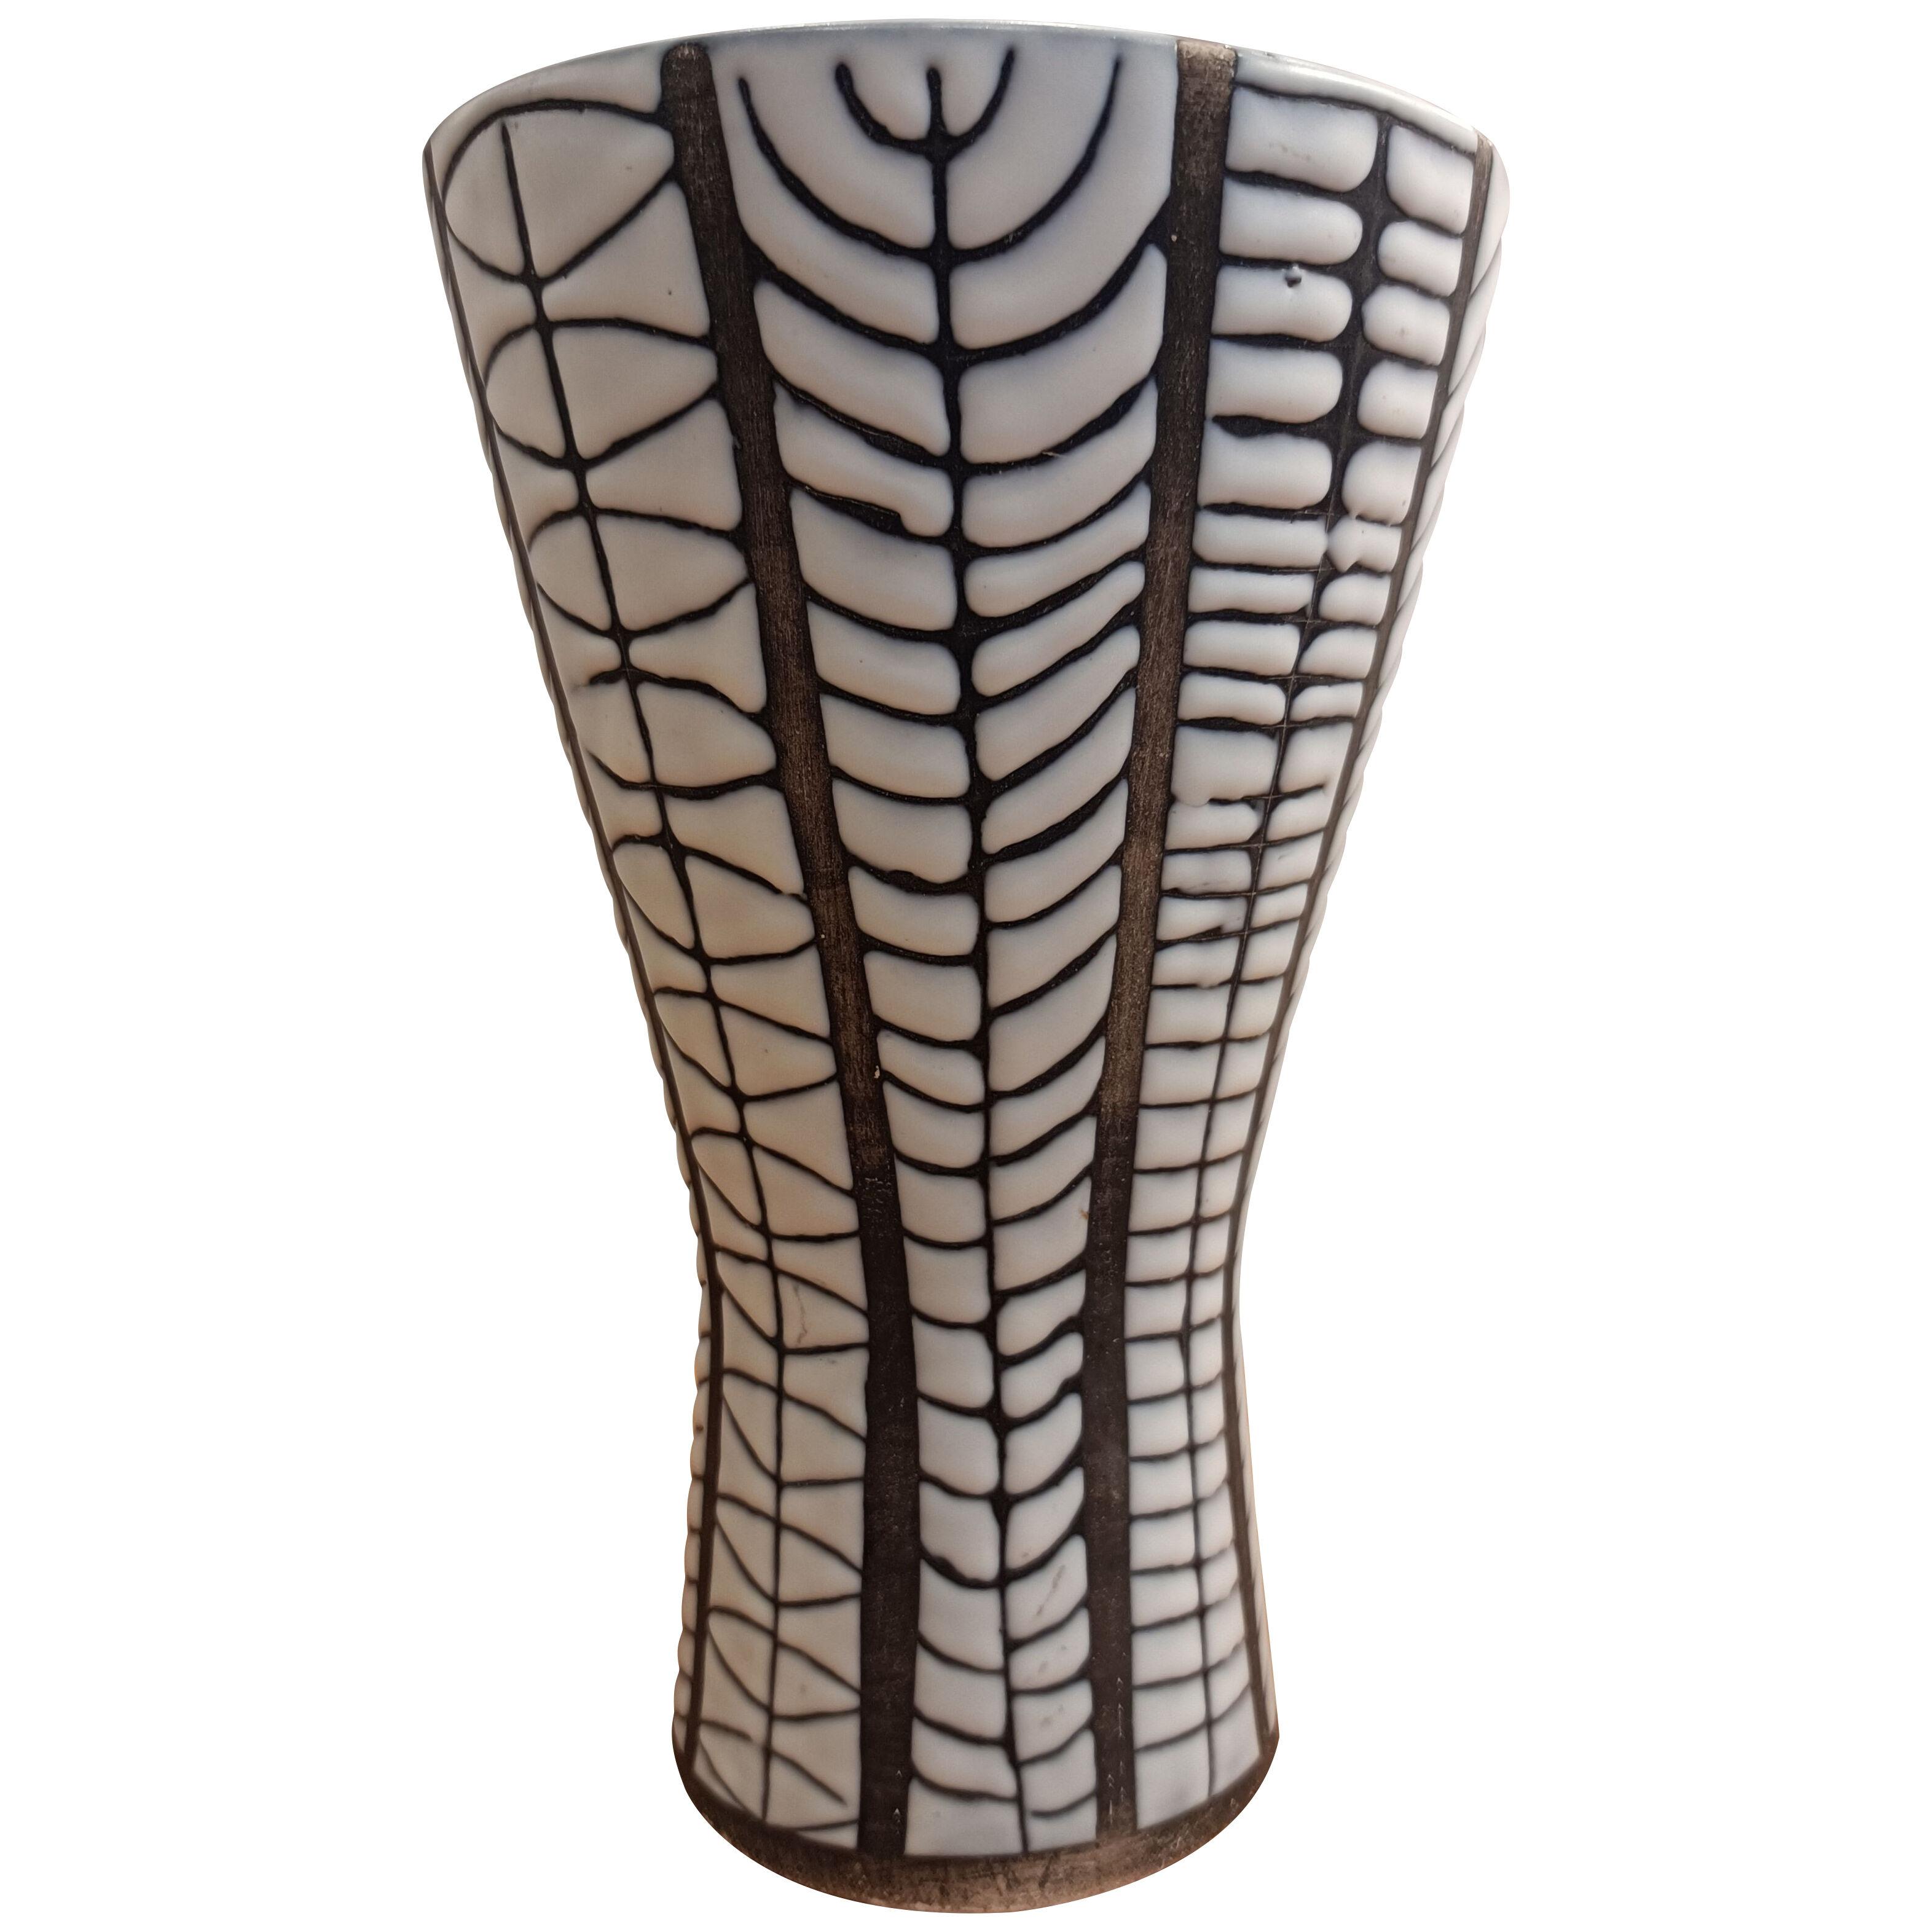 Ceramic "Diabolo" vase by Roger Capron, Vallauris.